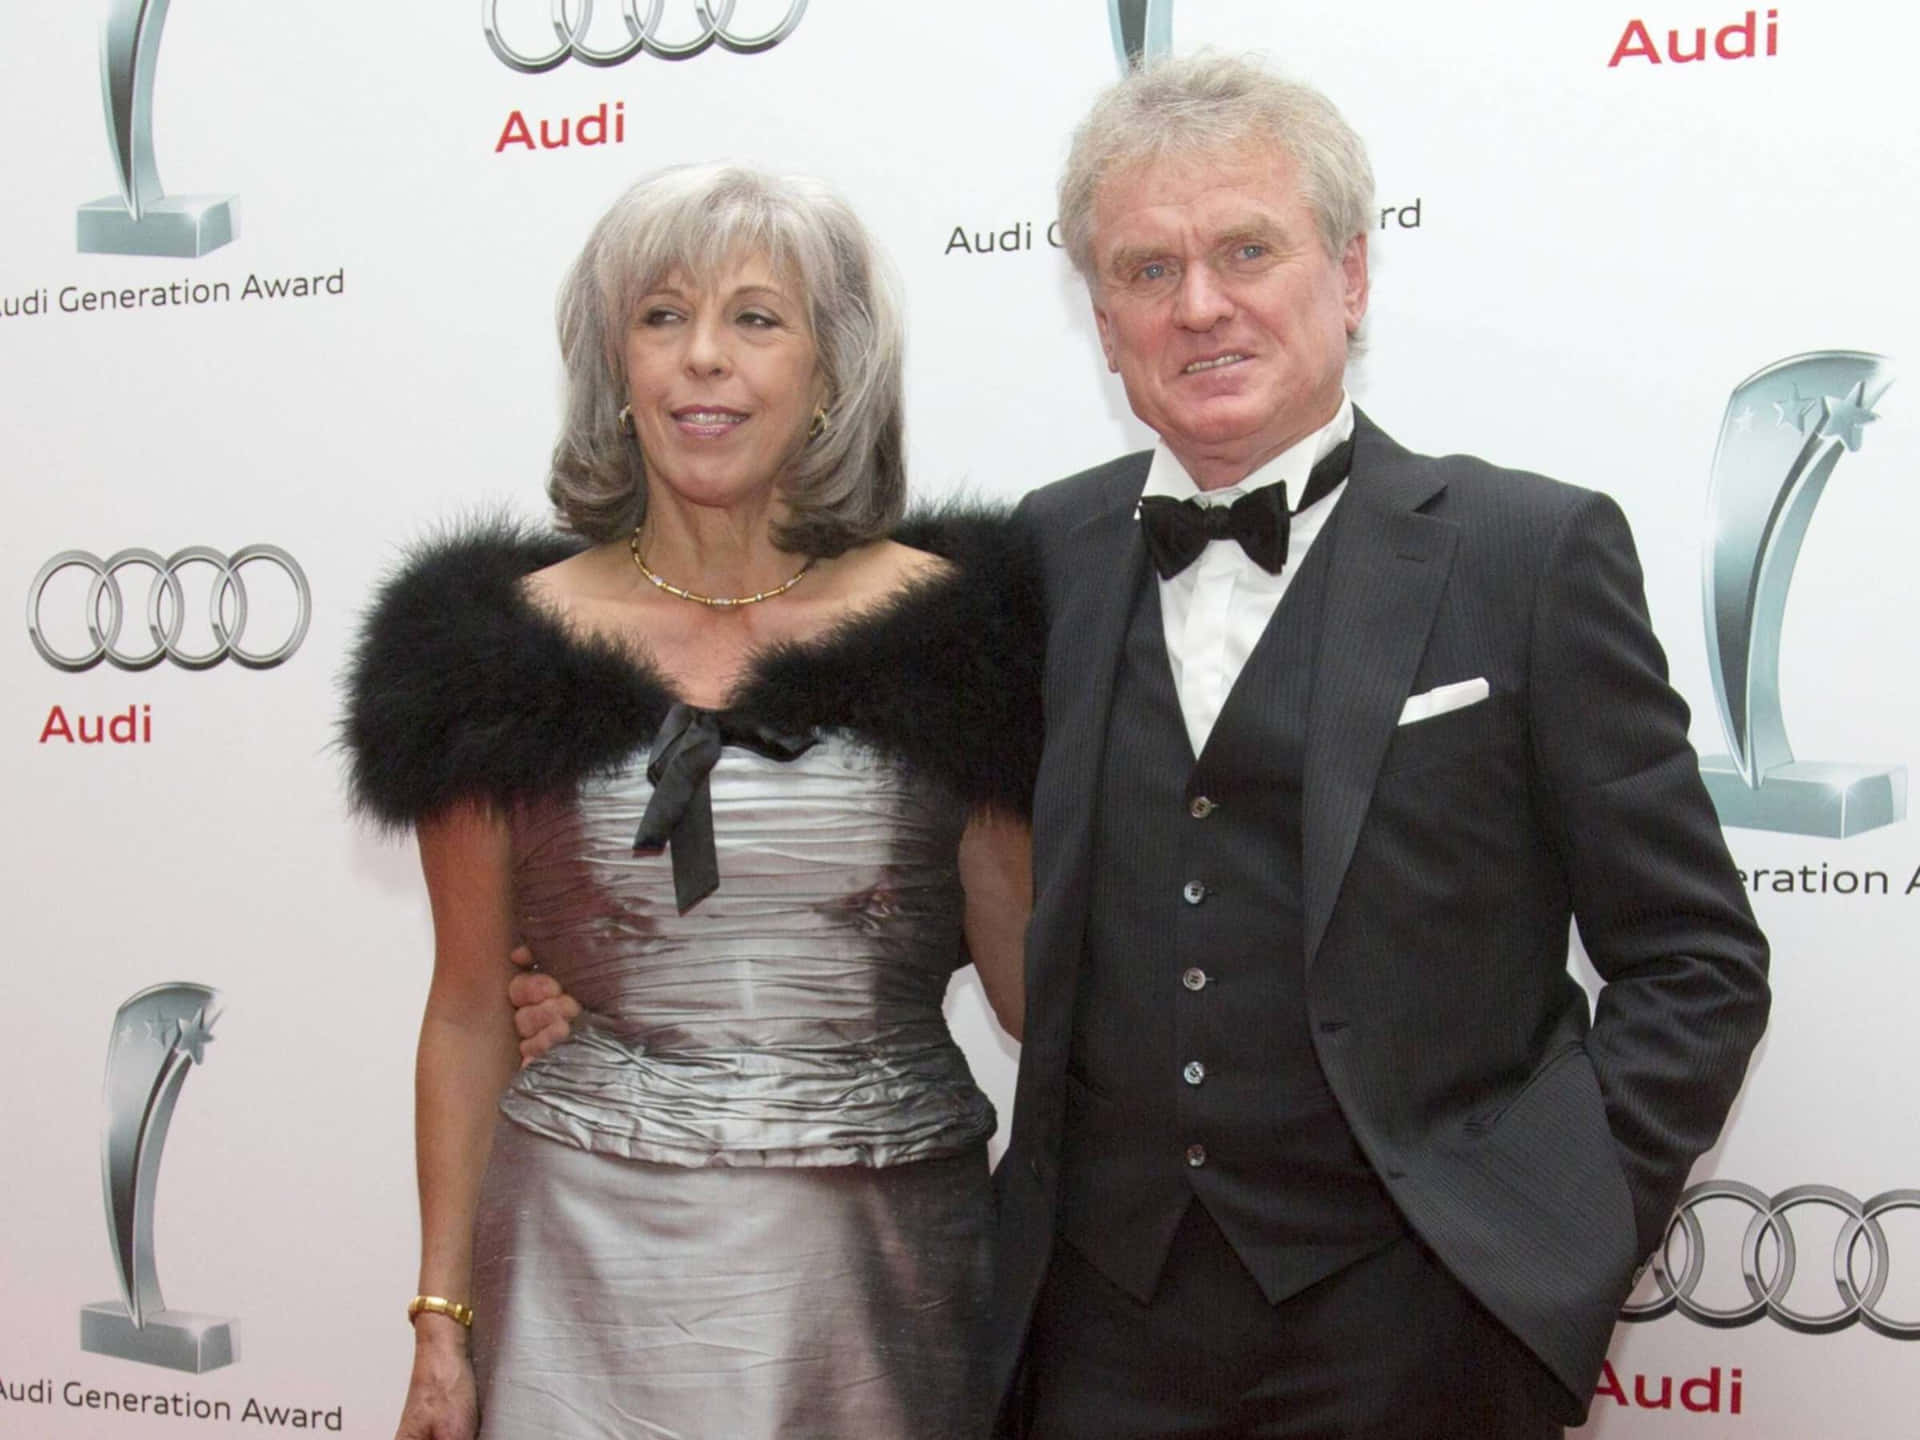 Sepp Maier And Wife Monika Roth At Audi Generation Award Event Wallpaper